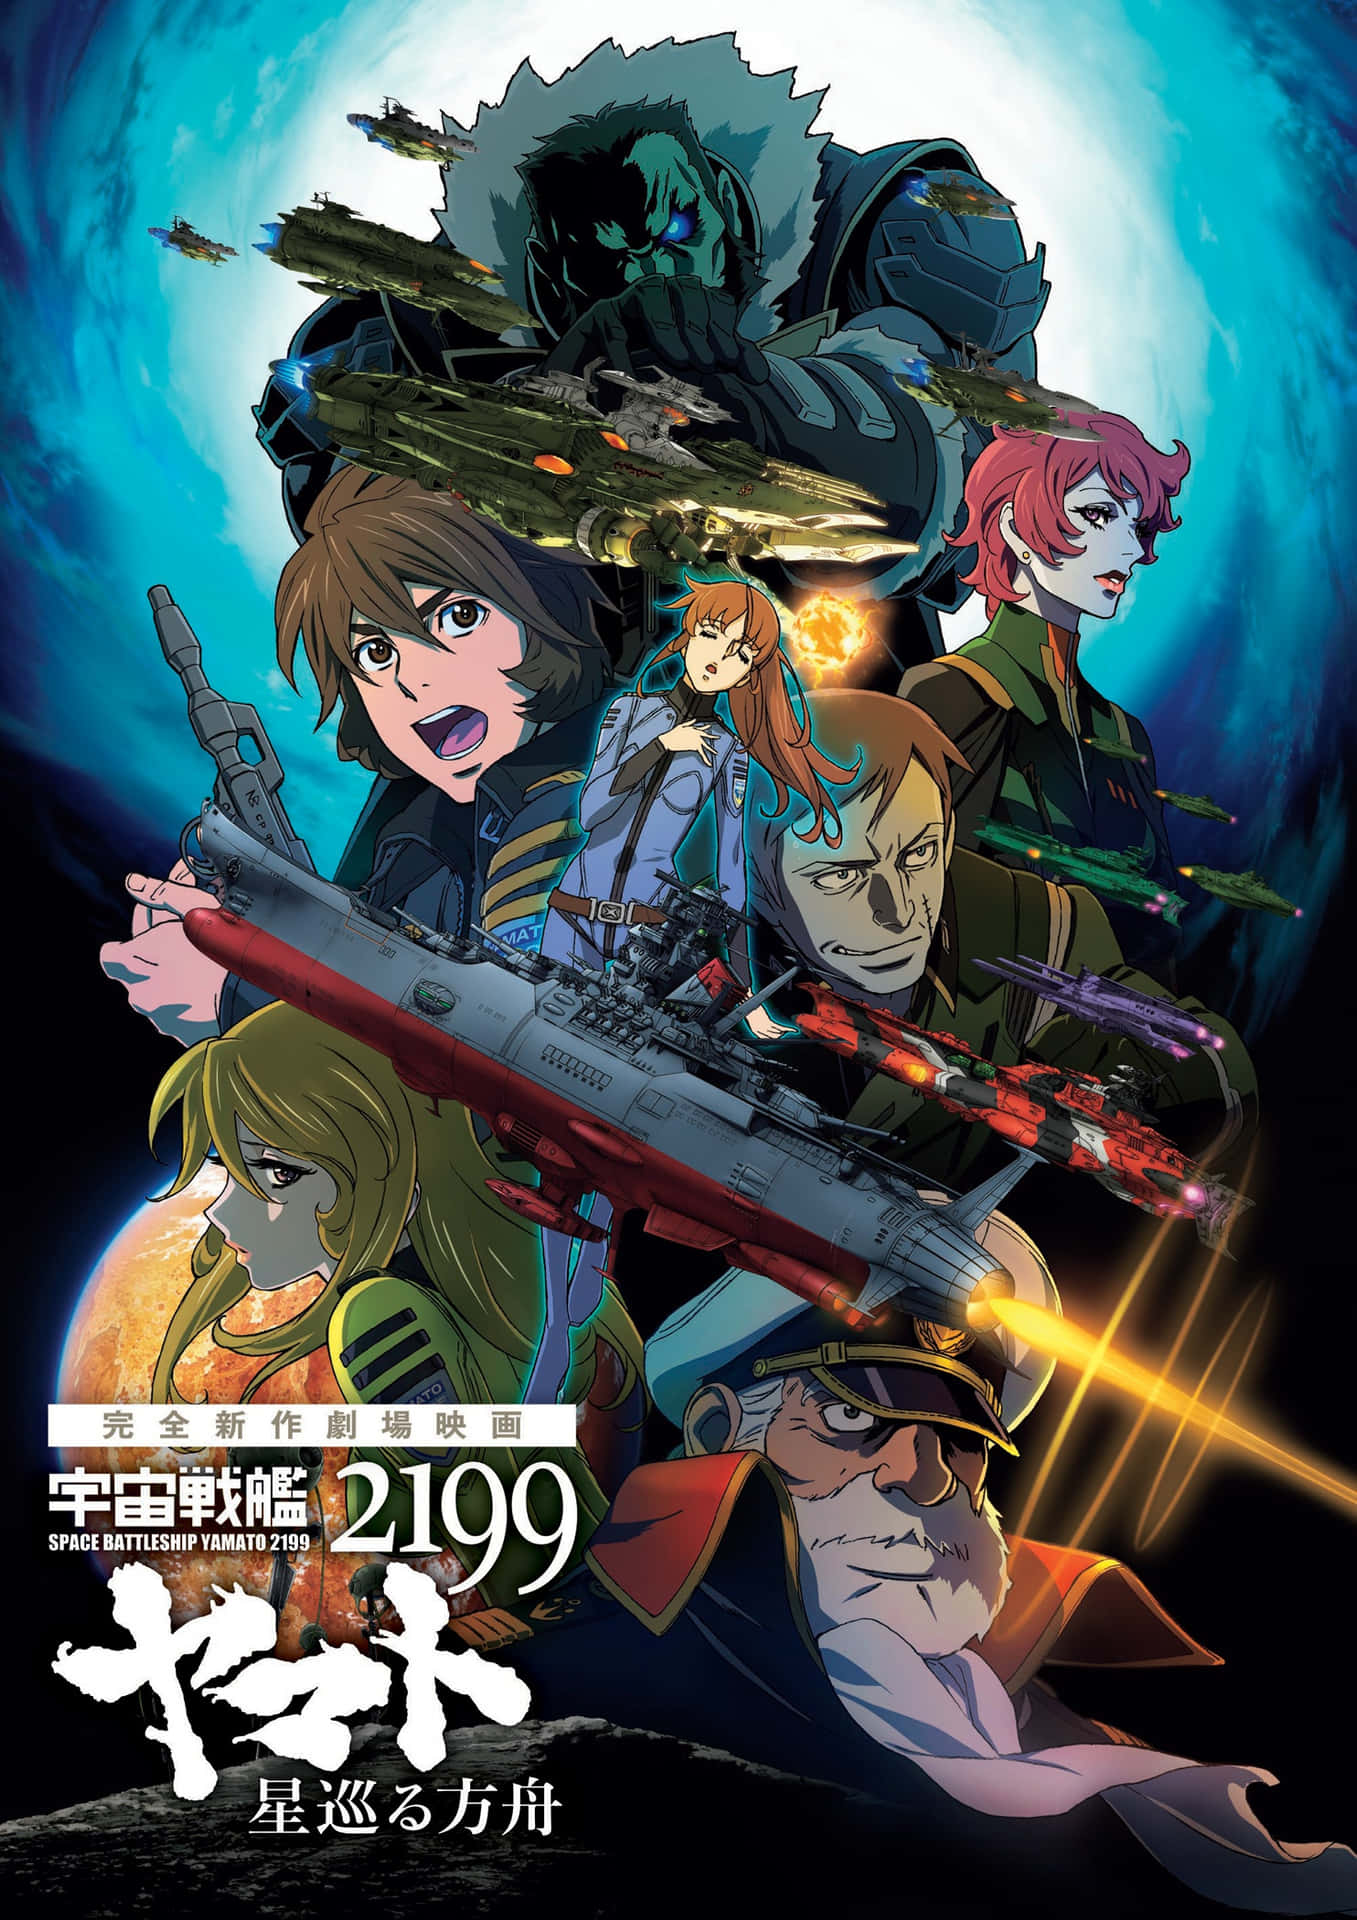 "The Legendary Space Battleship Yamato Defends the Galaxy" Wallpaper